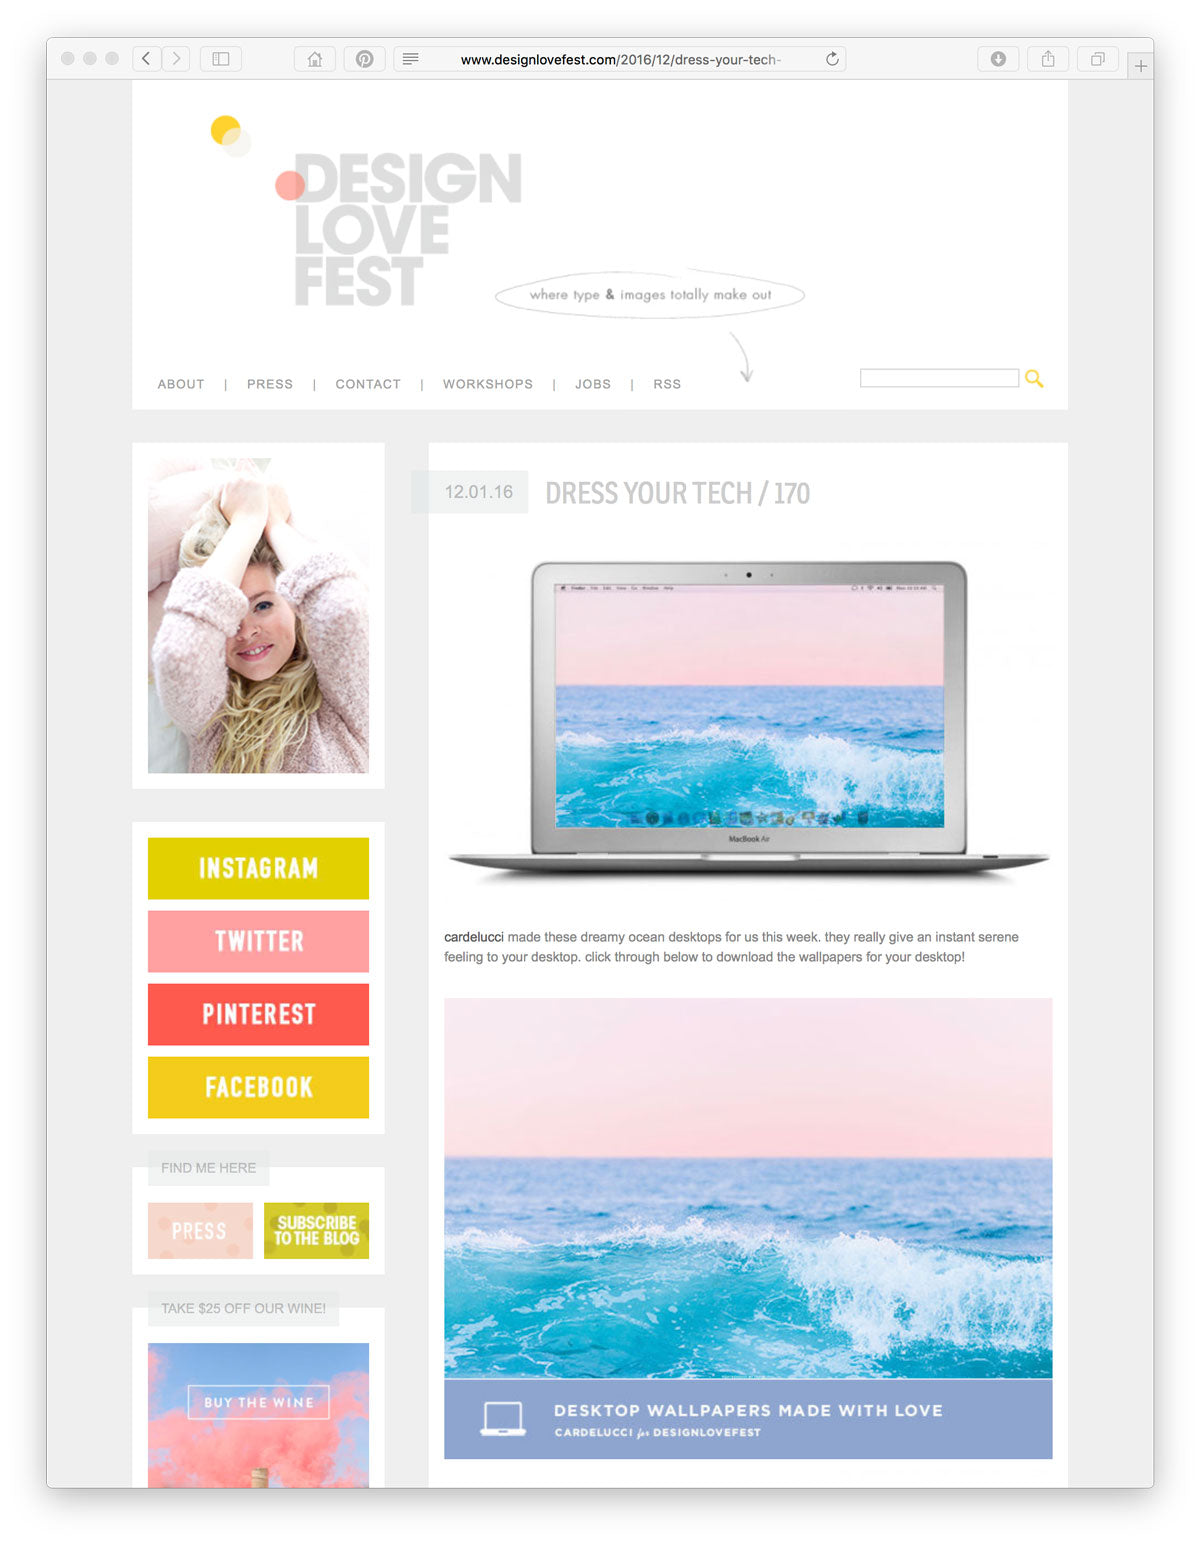 My Work as Desktop Wallpapers on Designlovefest  lindsaygardnerartcom